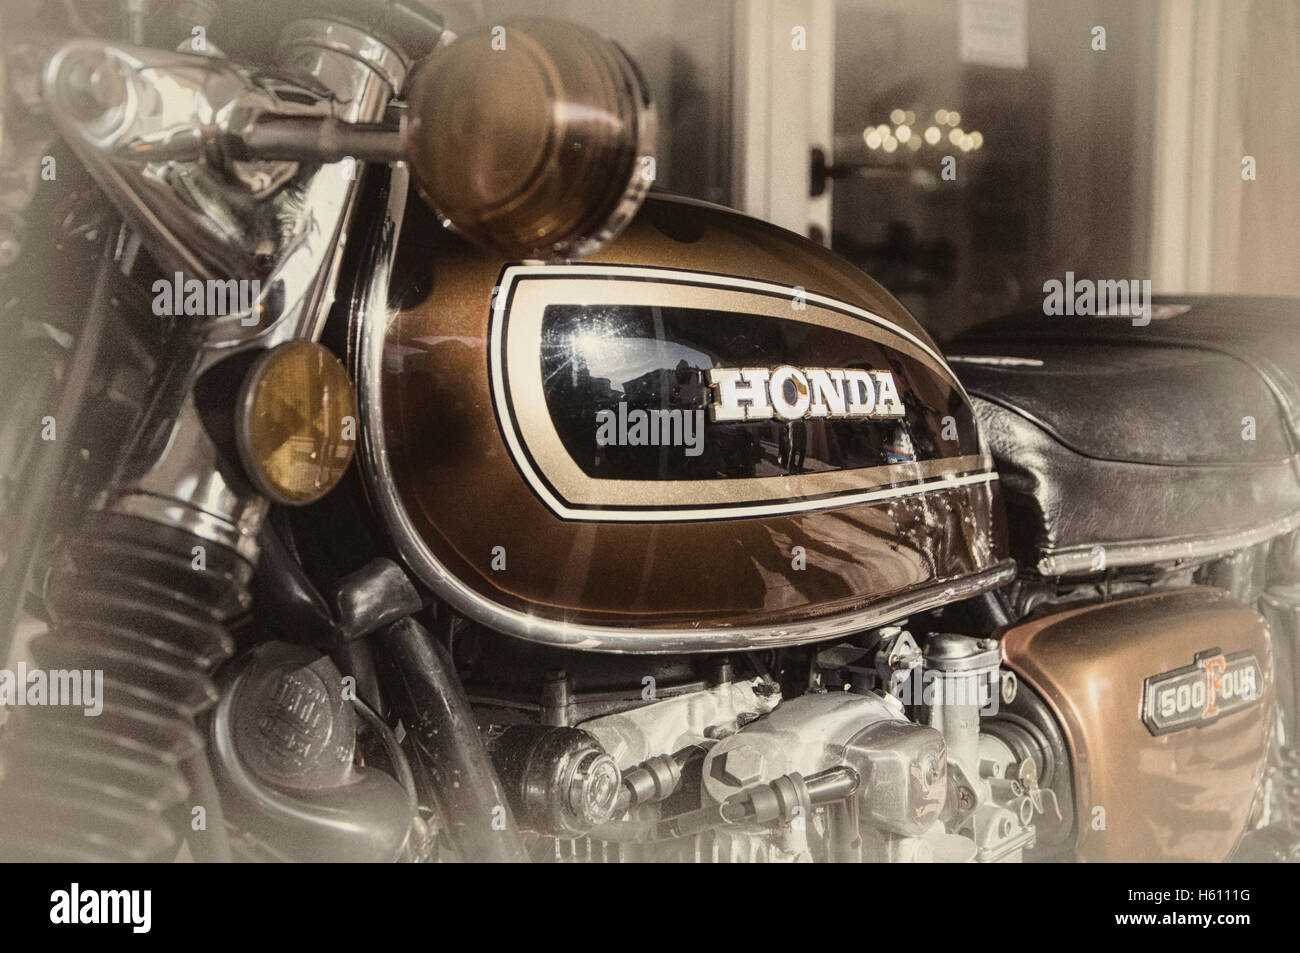 Honda classic motorcycle 500 four vintage Stock Photo